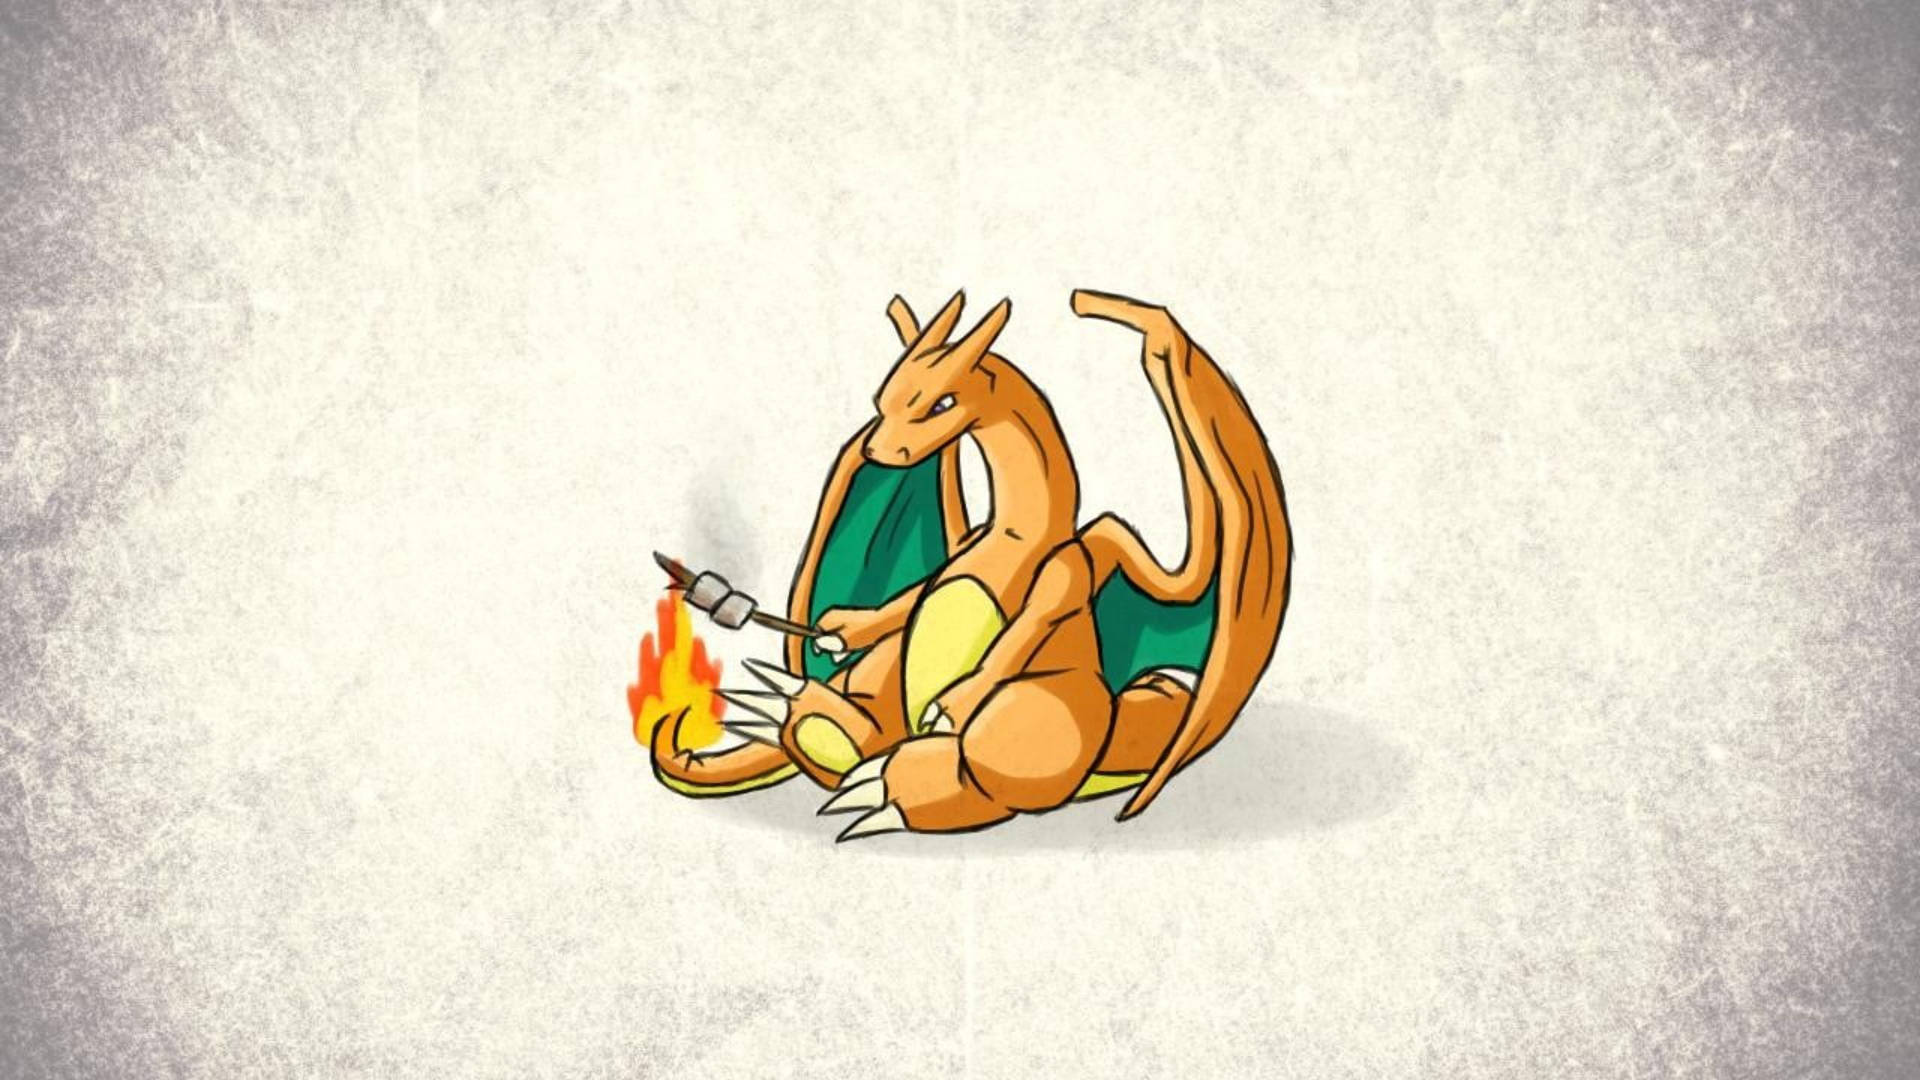 Charizard, the Fire-type Pokemon, toasting marshmallows Wallpaper